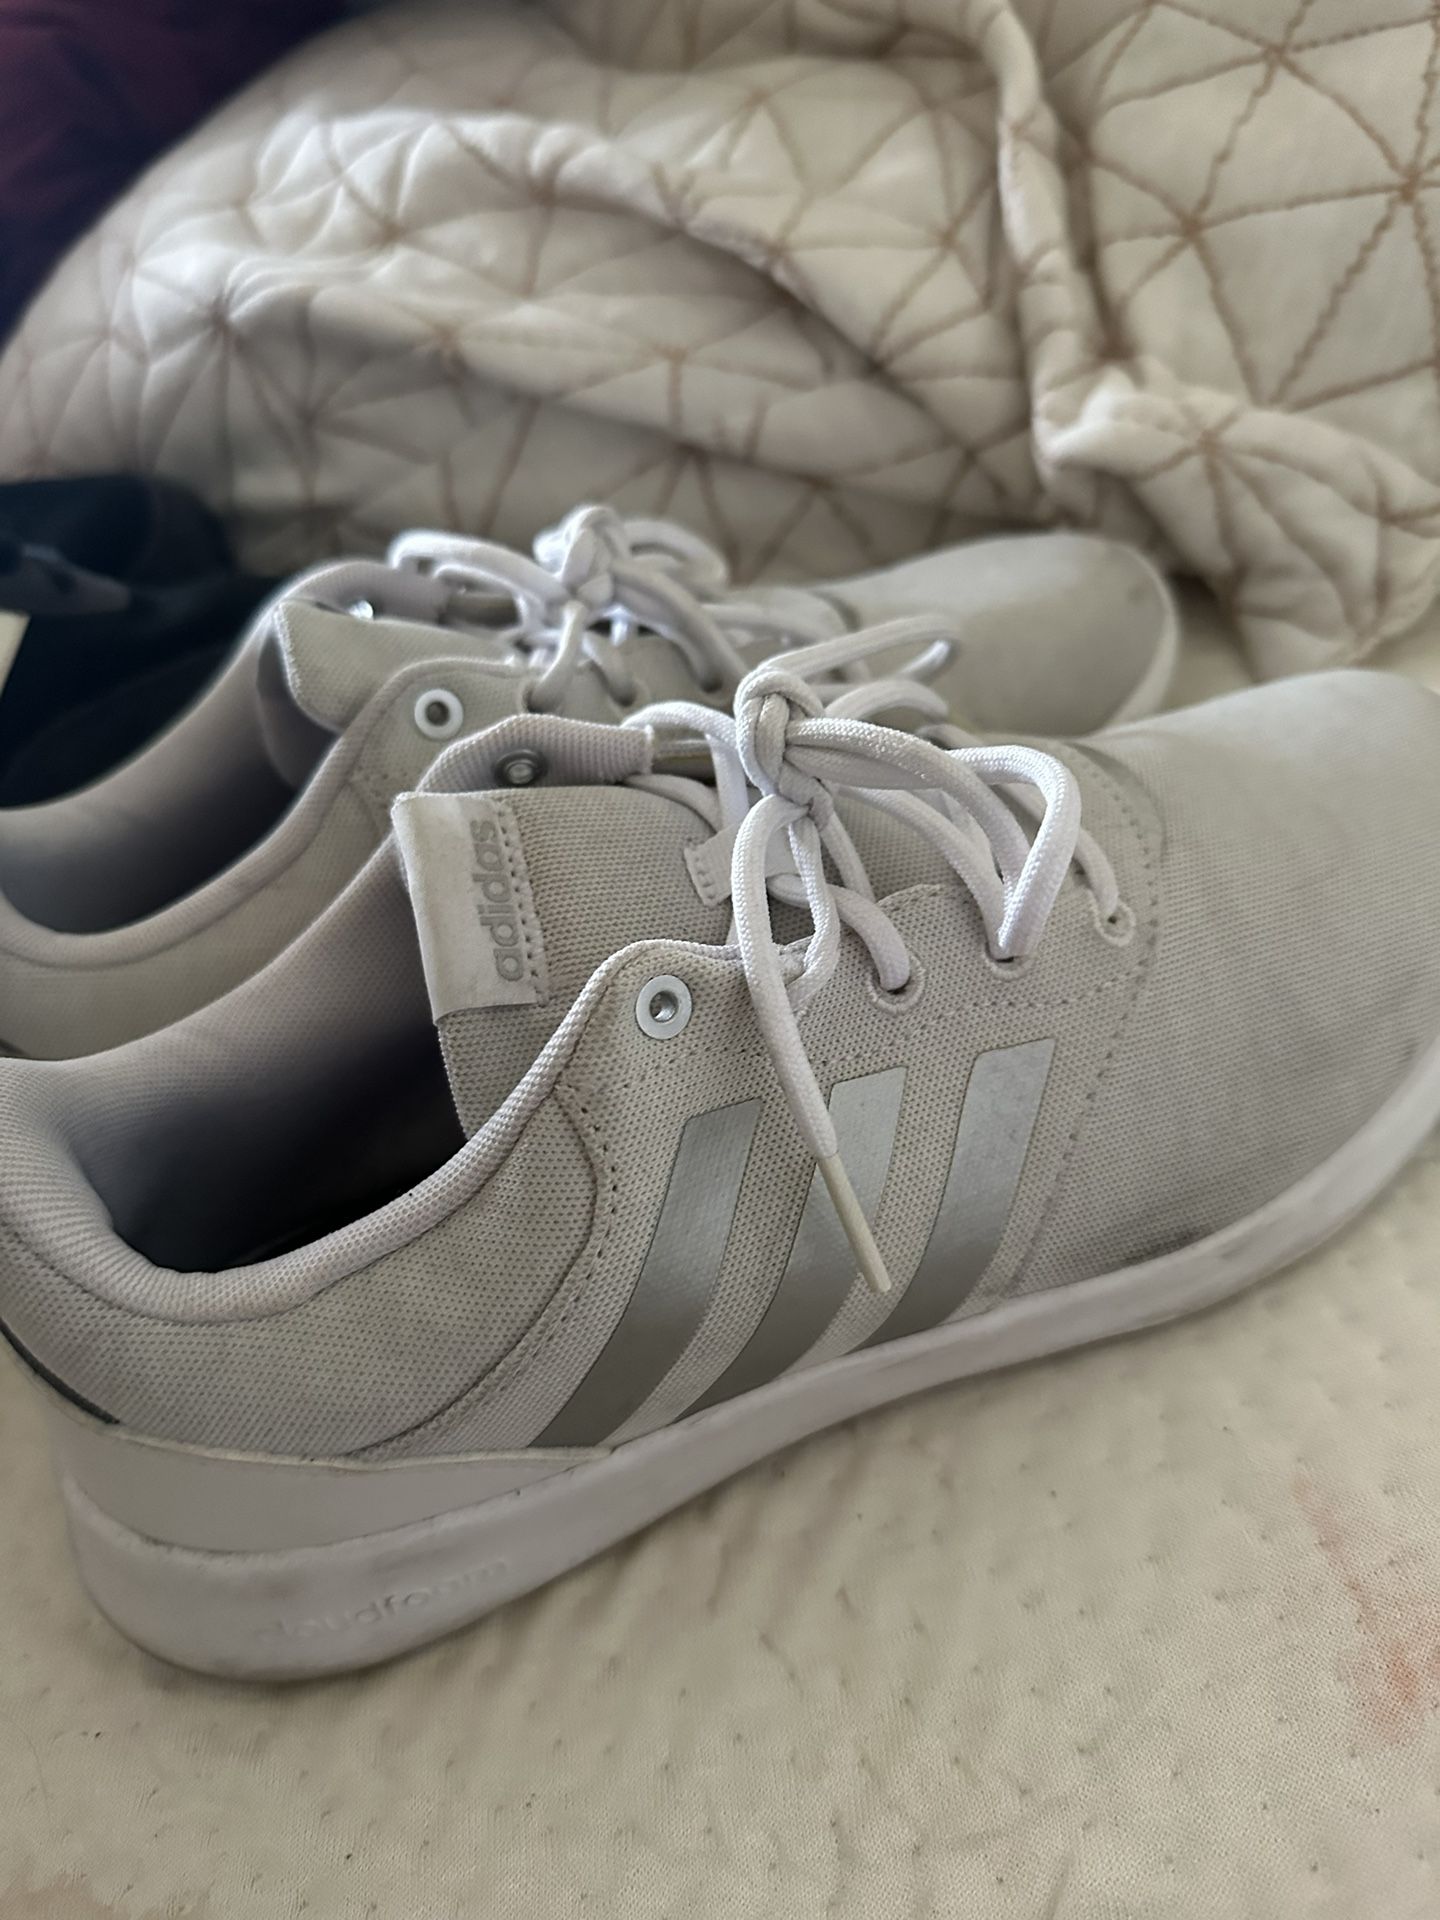 Adidas Women’s Shoes